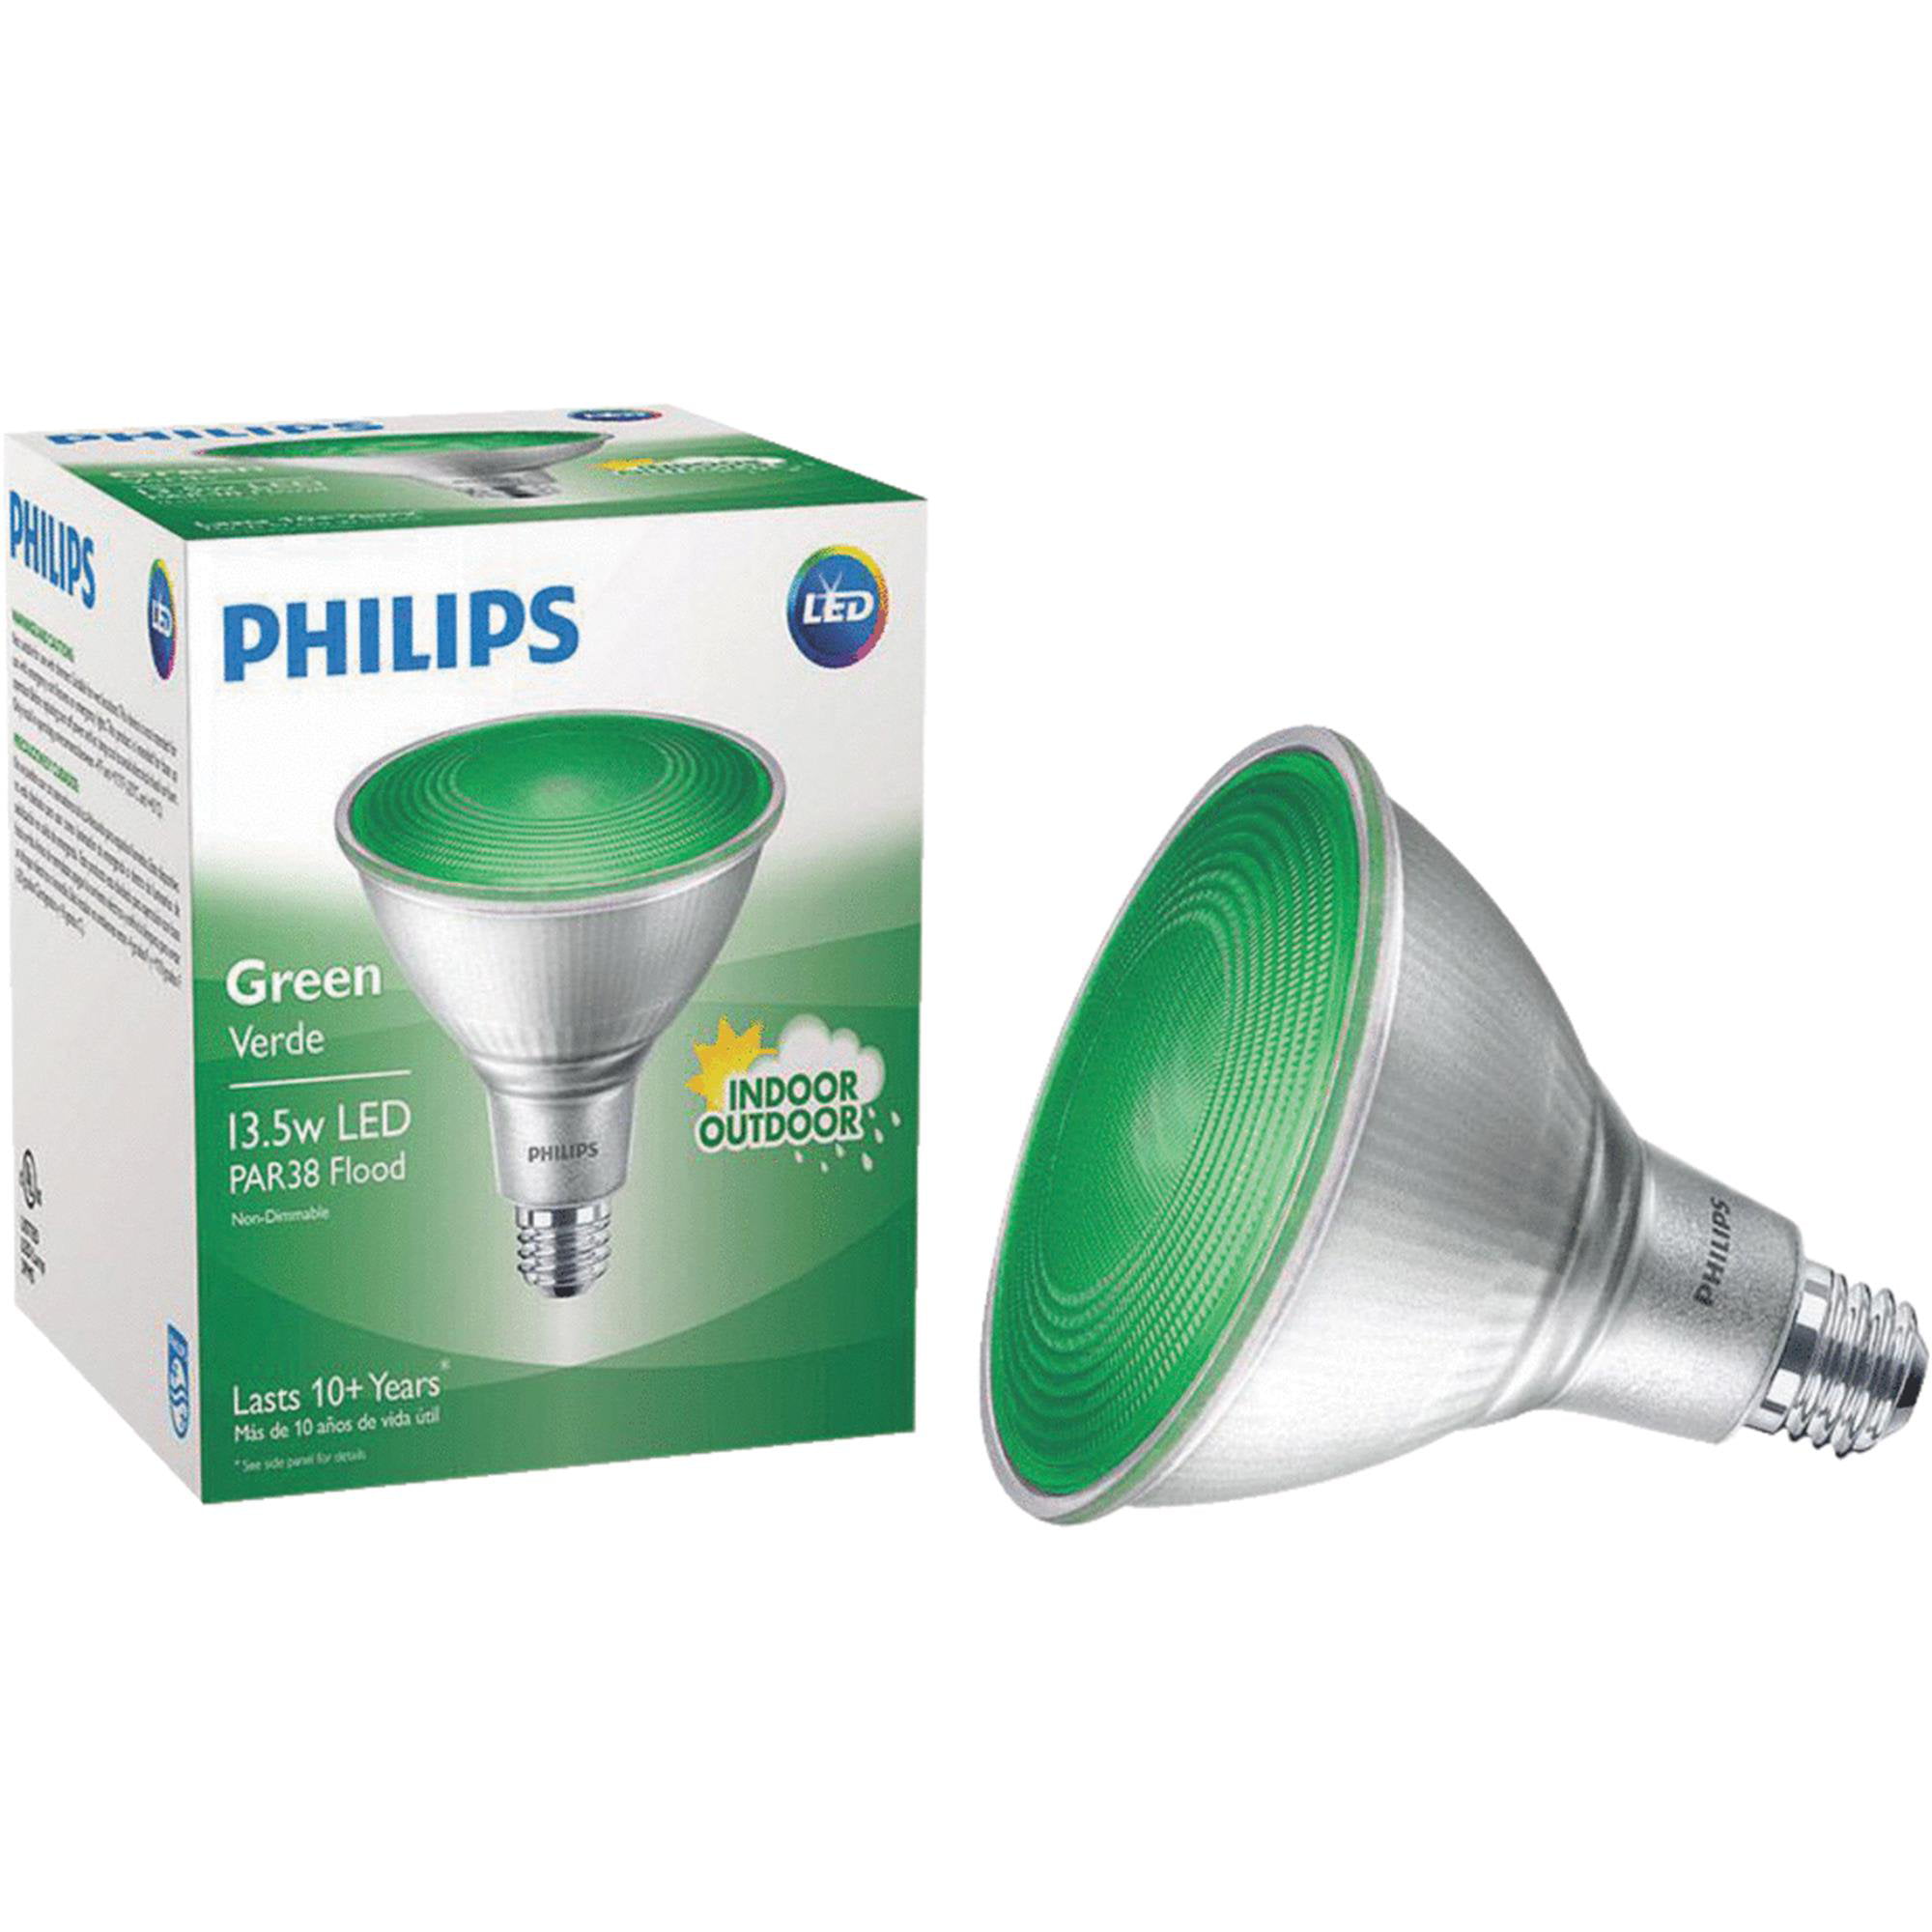 Philips Led Bulb Par38 13 5w 120v, Outdoor Flood Light Bulb Types